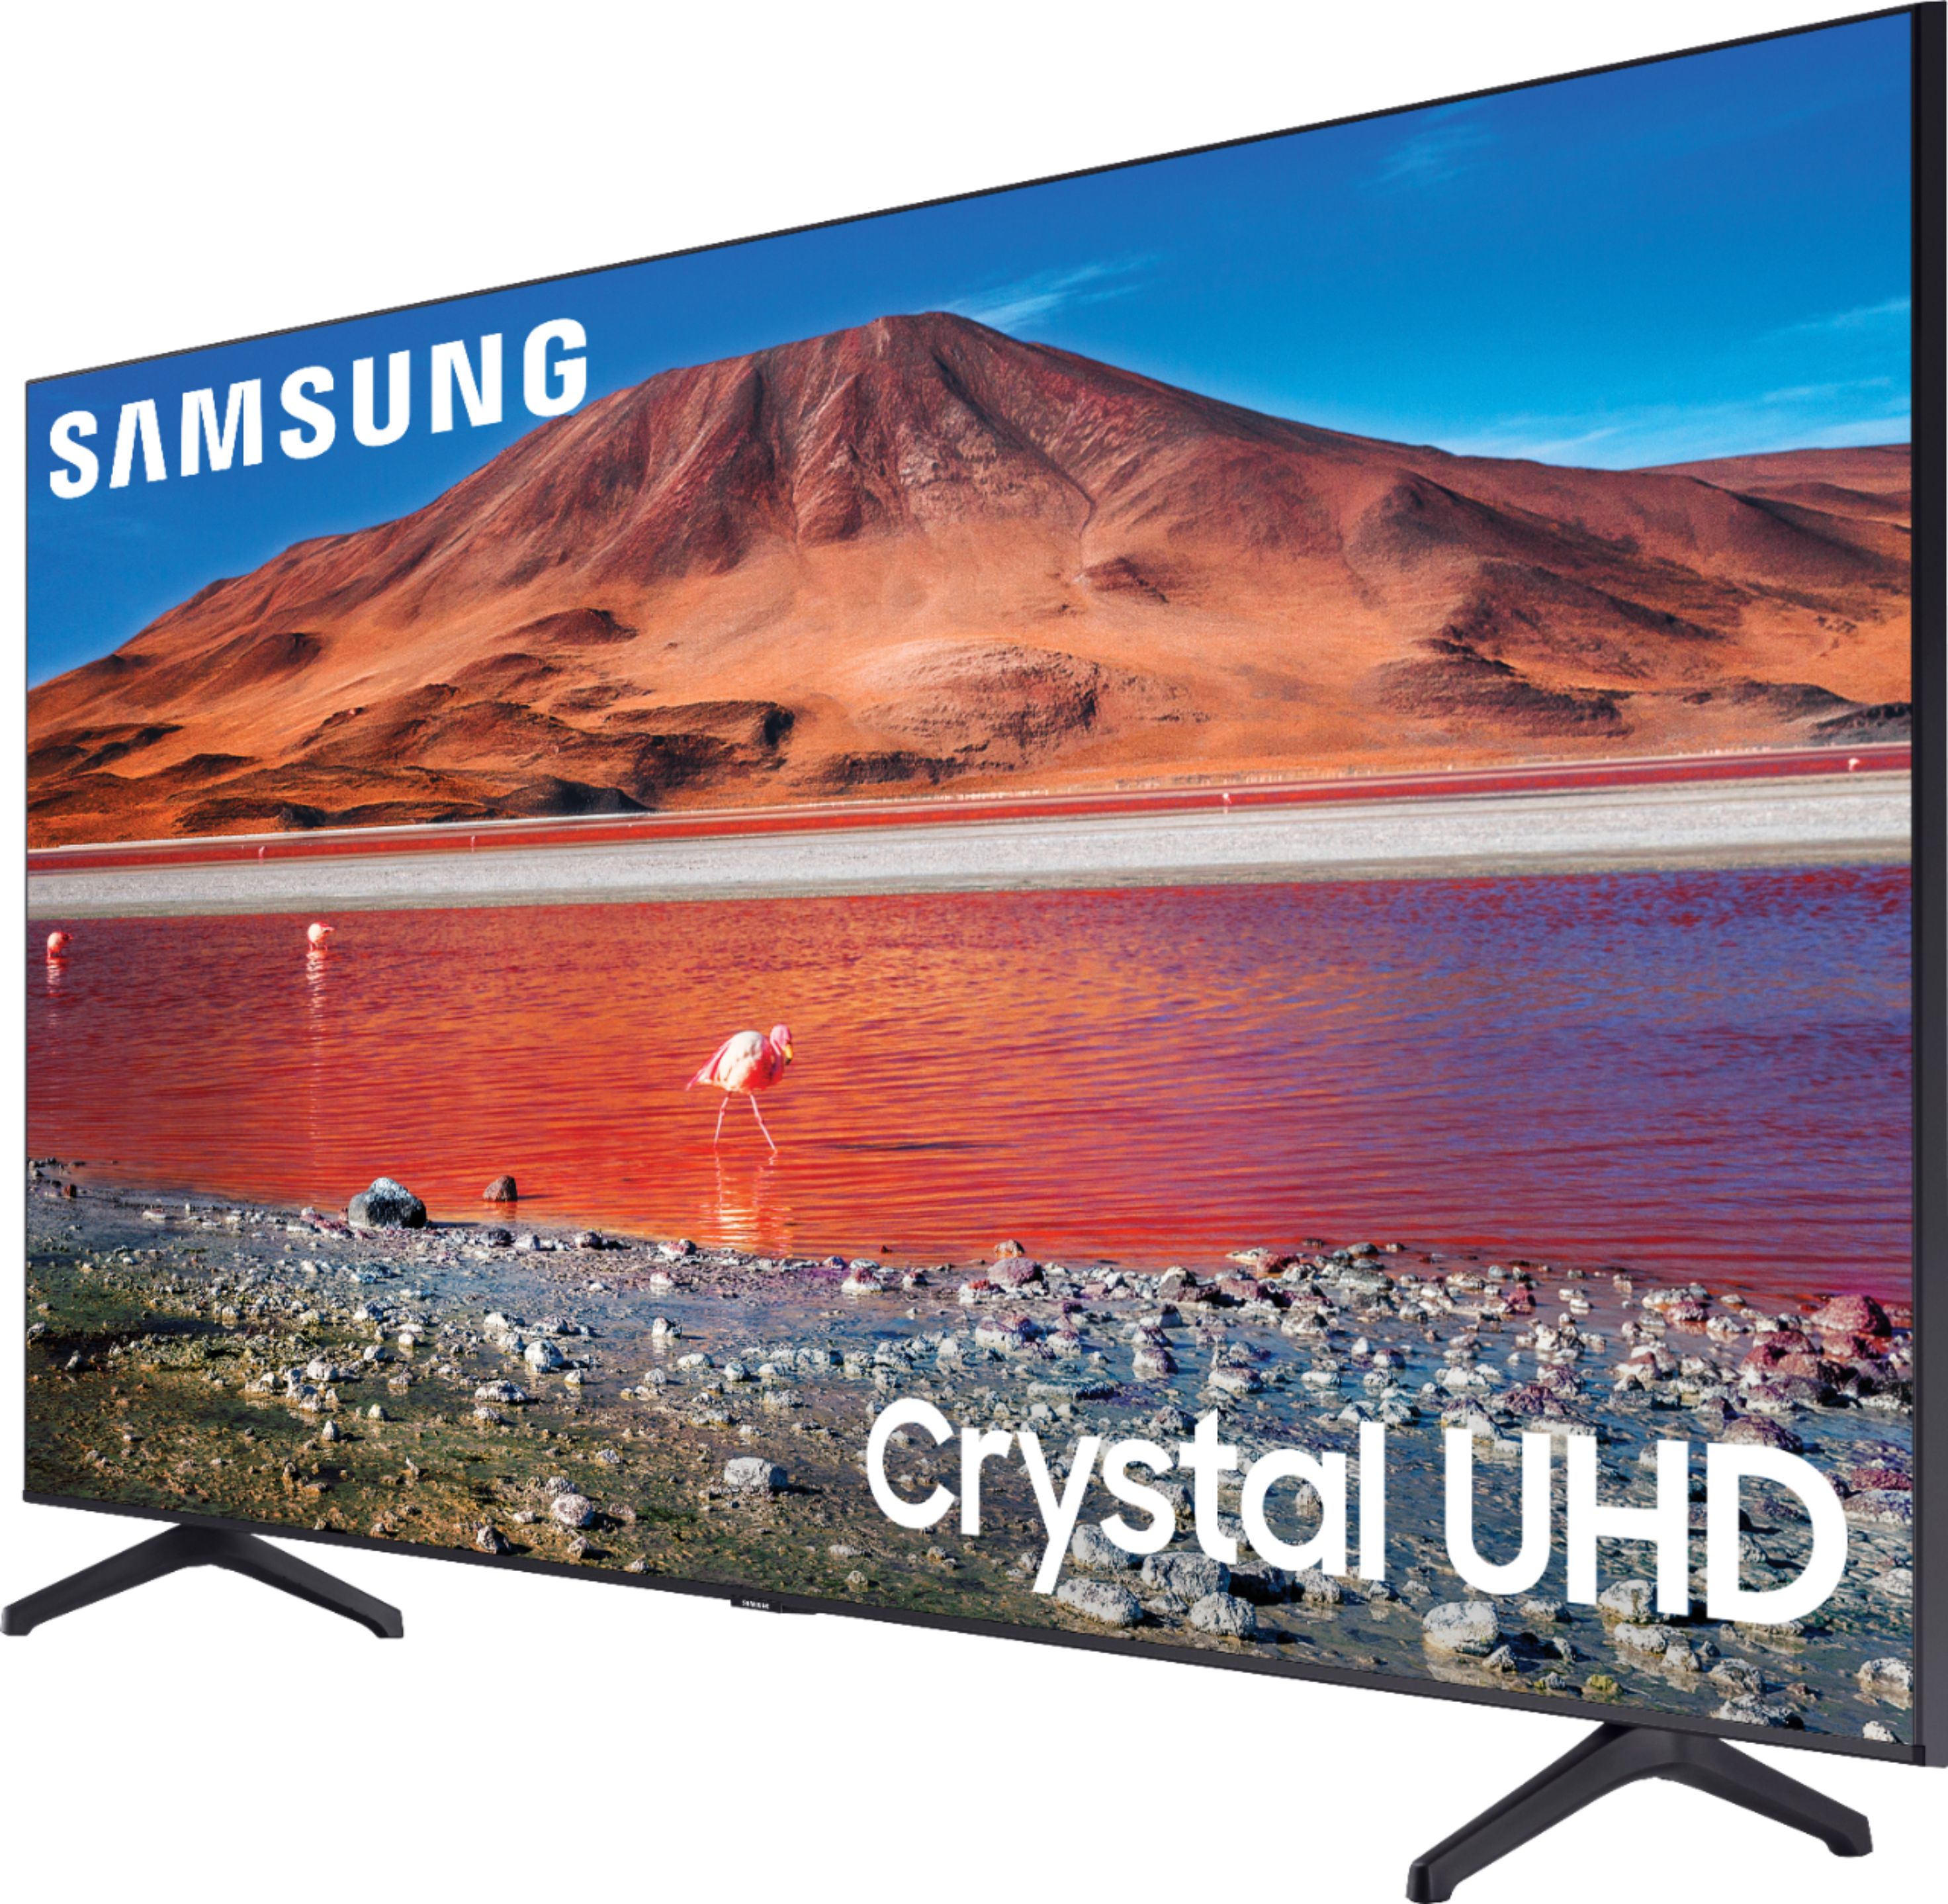 Samsung 50 Class 7 Series Led 4k Uhd Smart Tizen Tv Un50tu7000fxza Best Buy